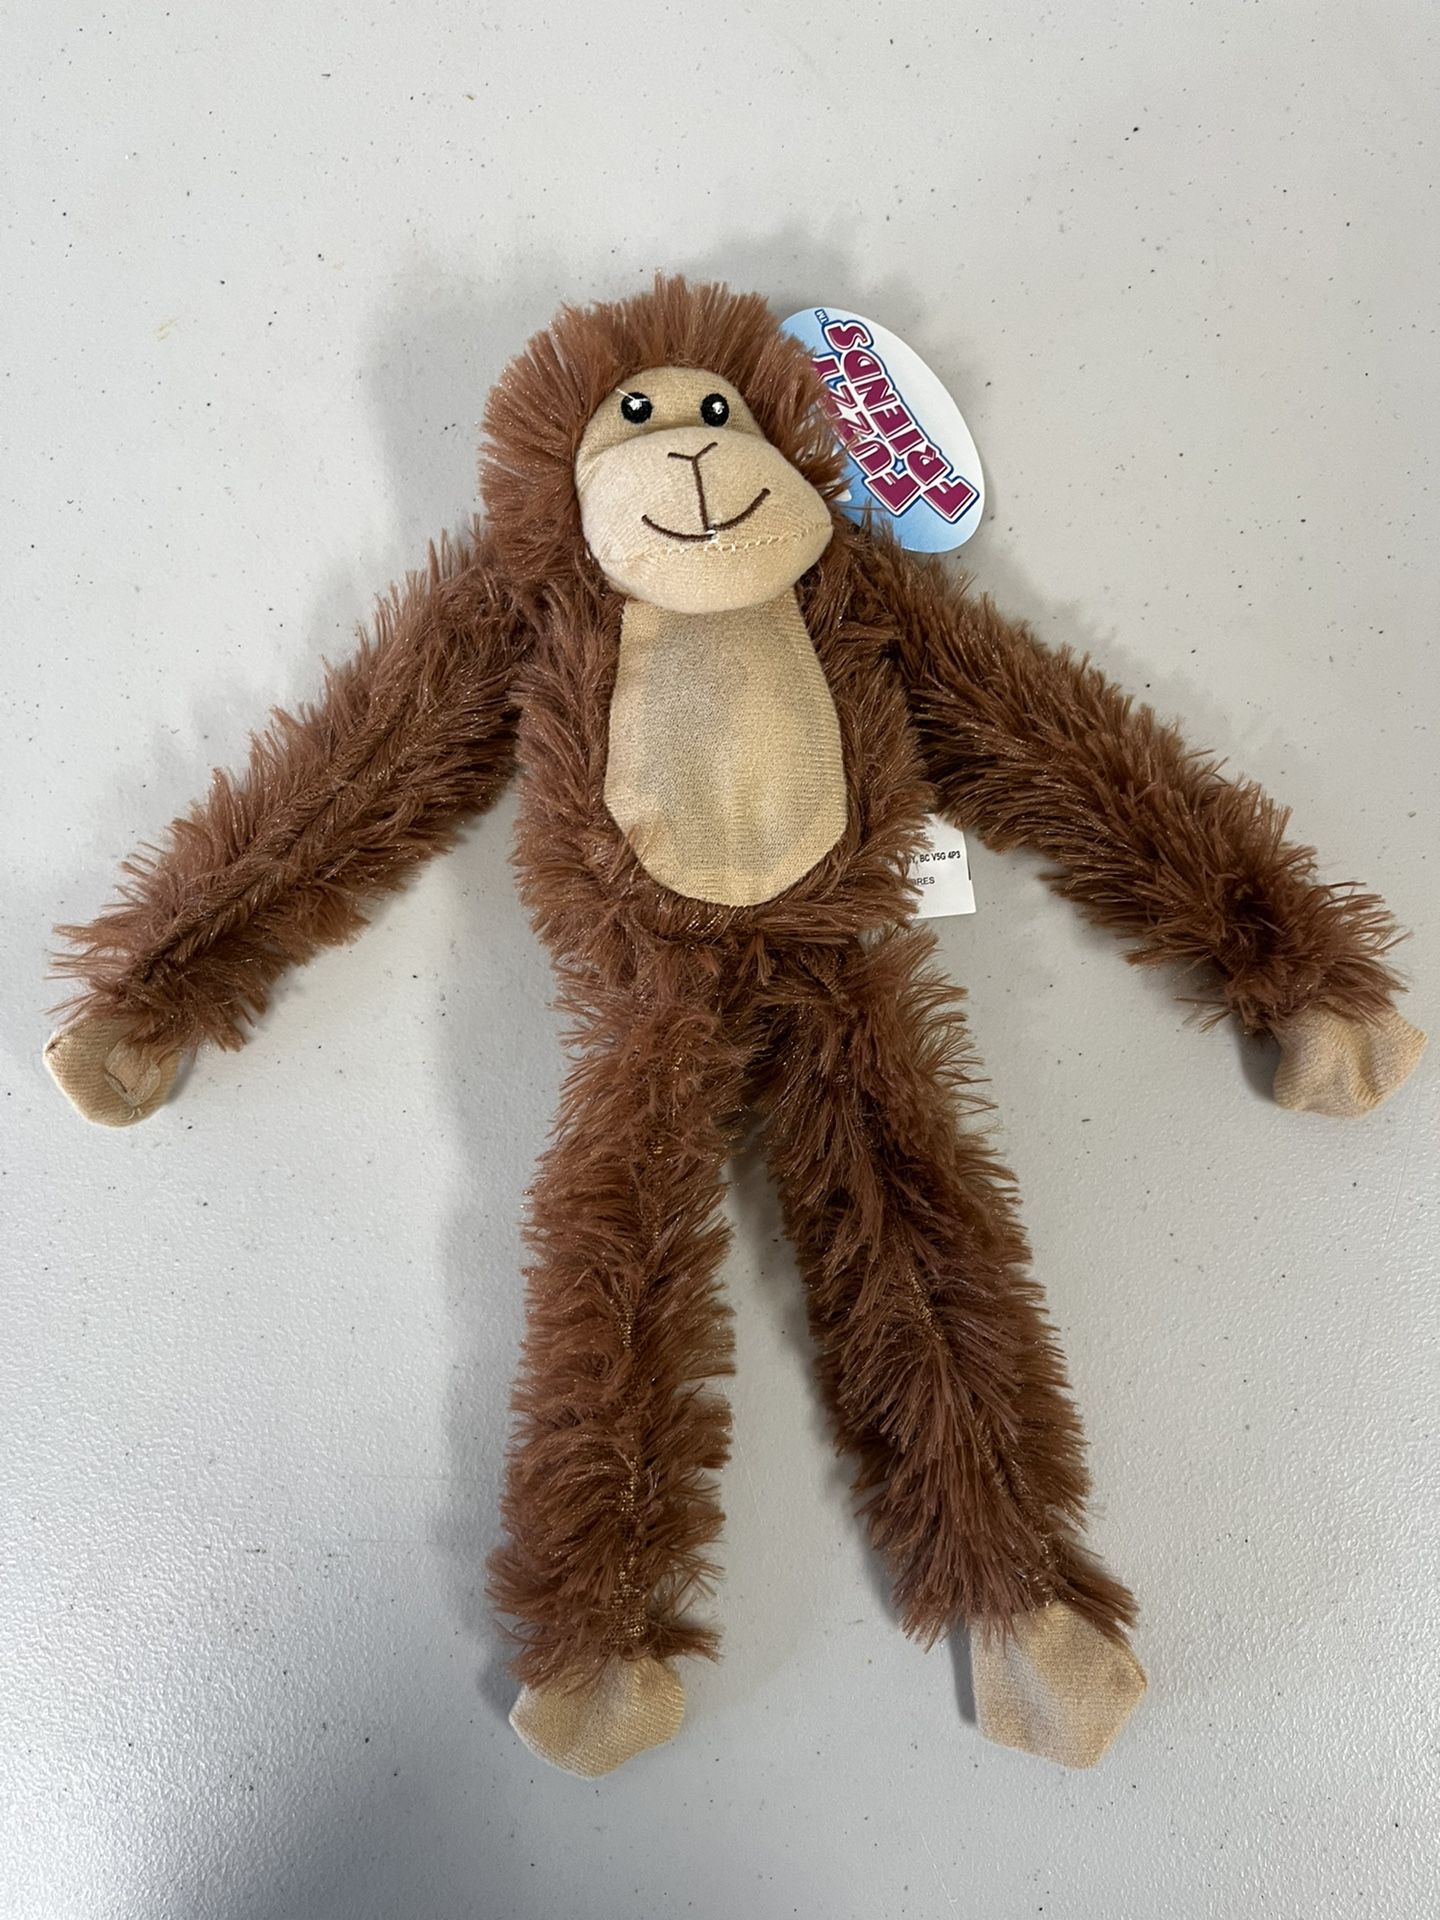 Fuzzy Friends Plush Monkey Toy With Velcro Hands 